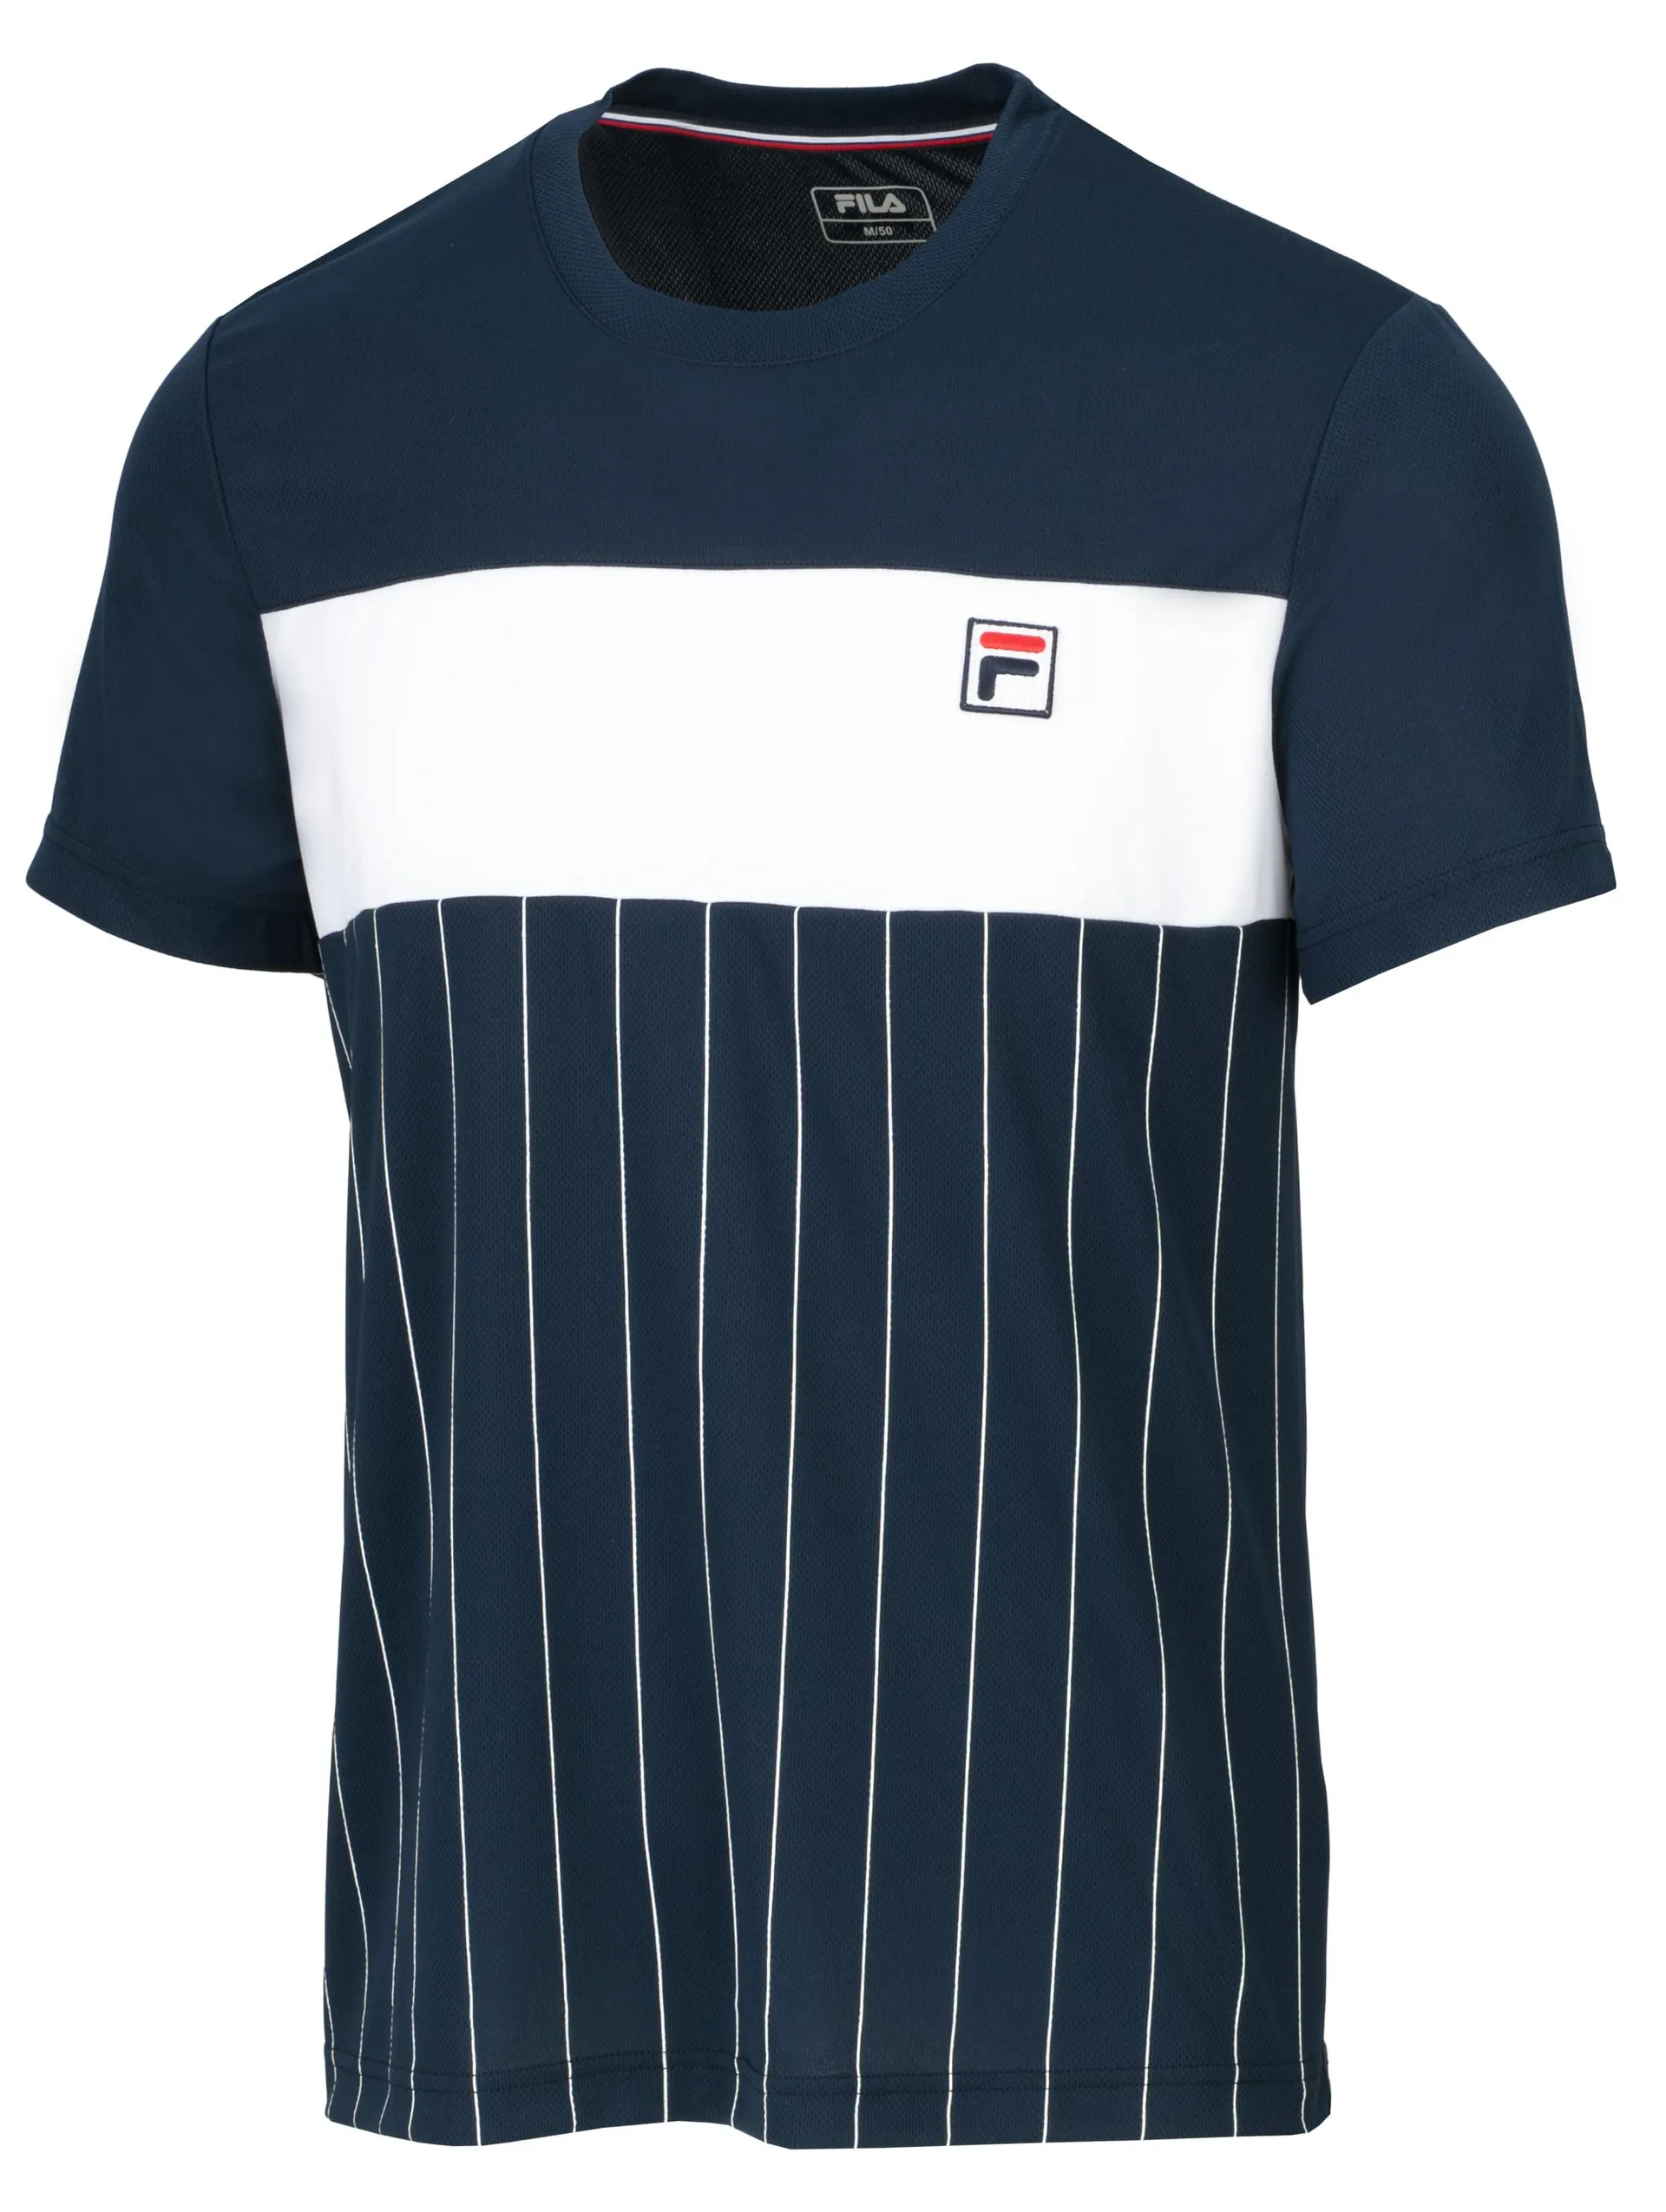 Mauri Tennis T-Shirt